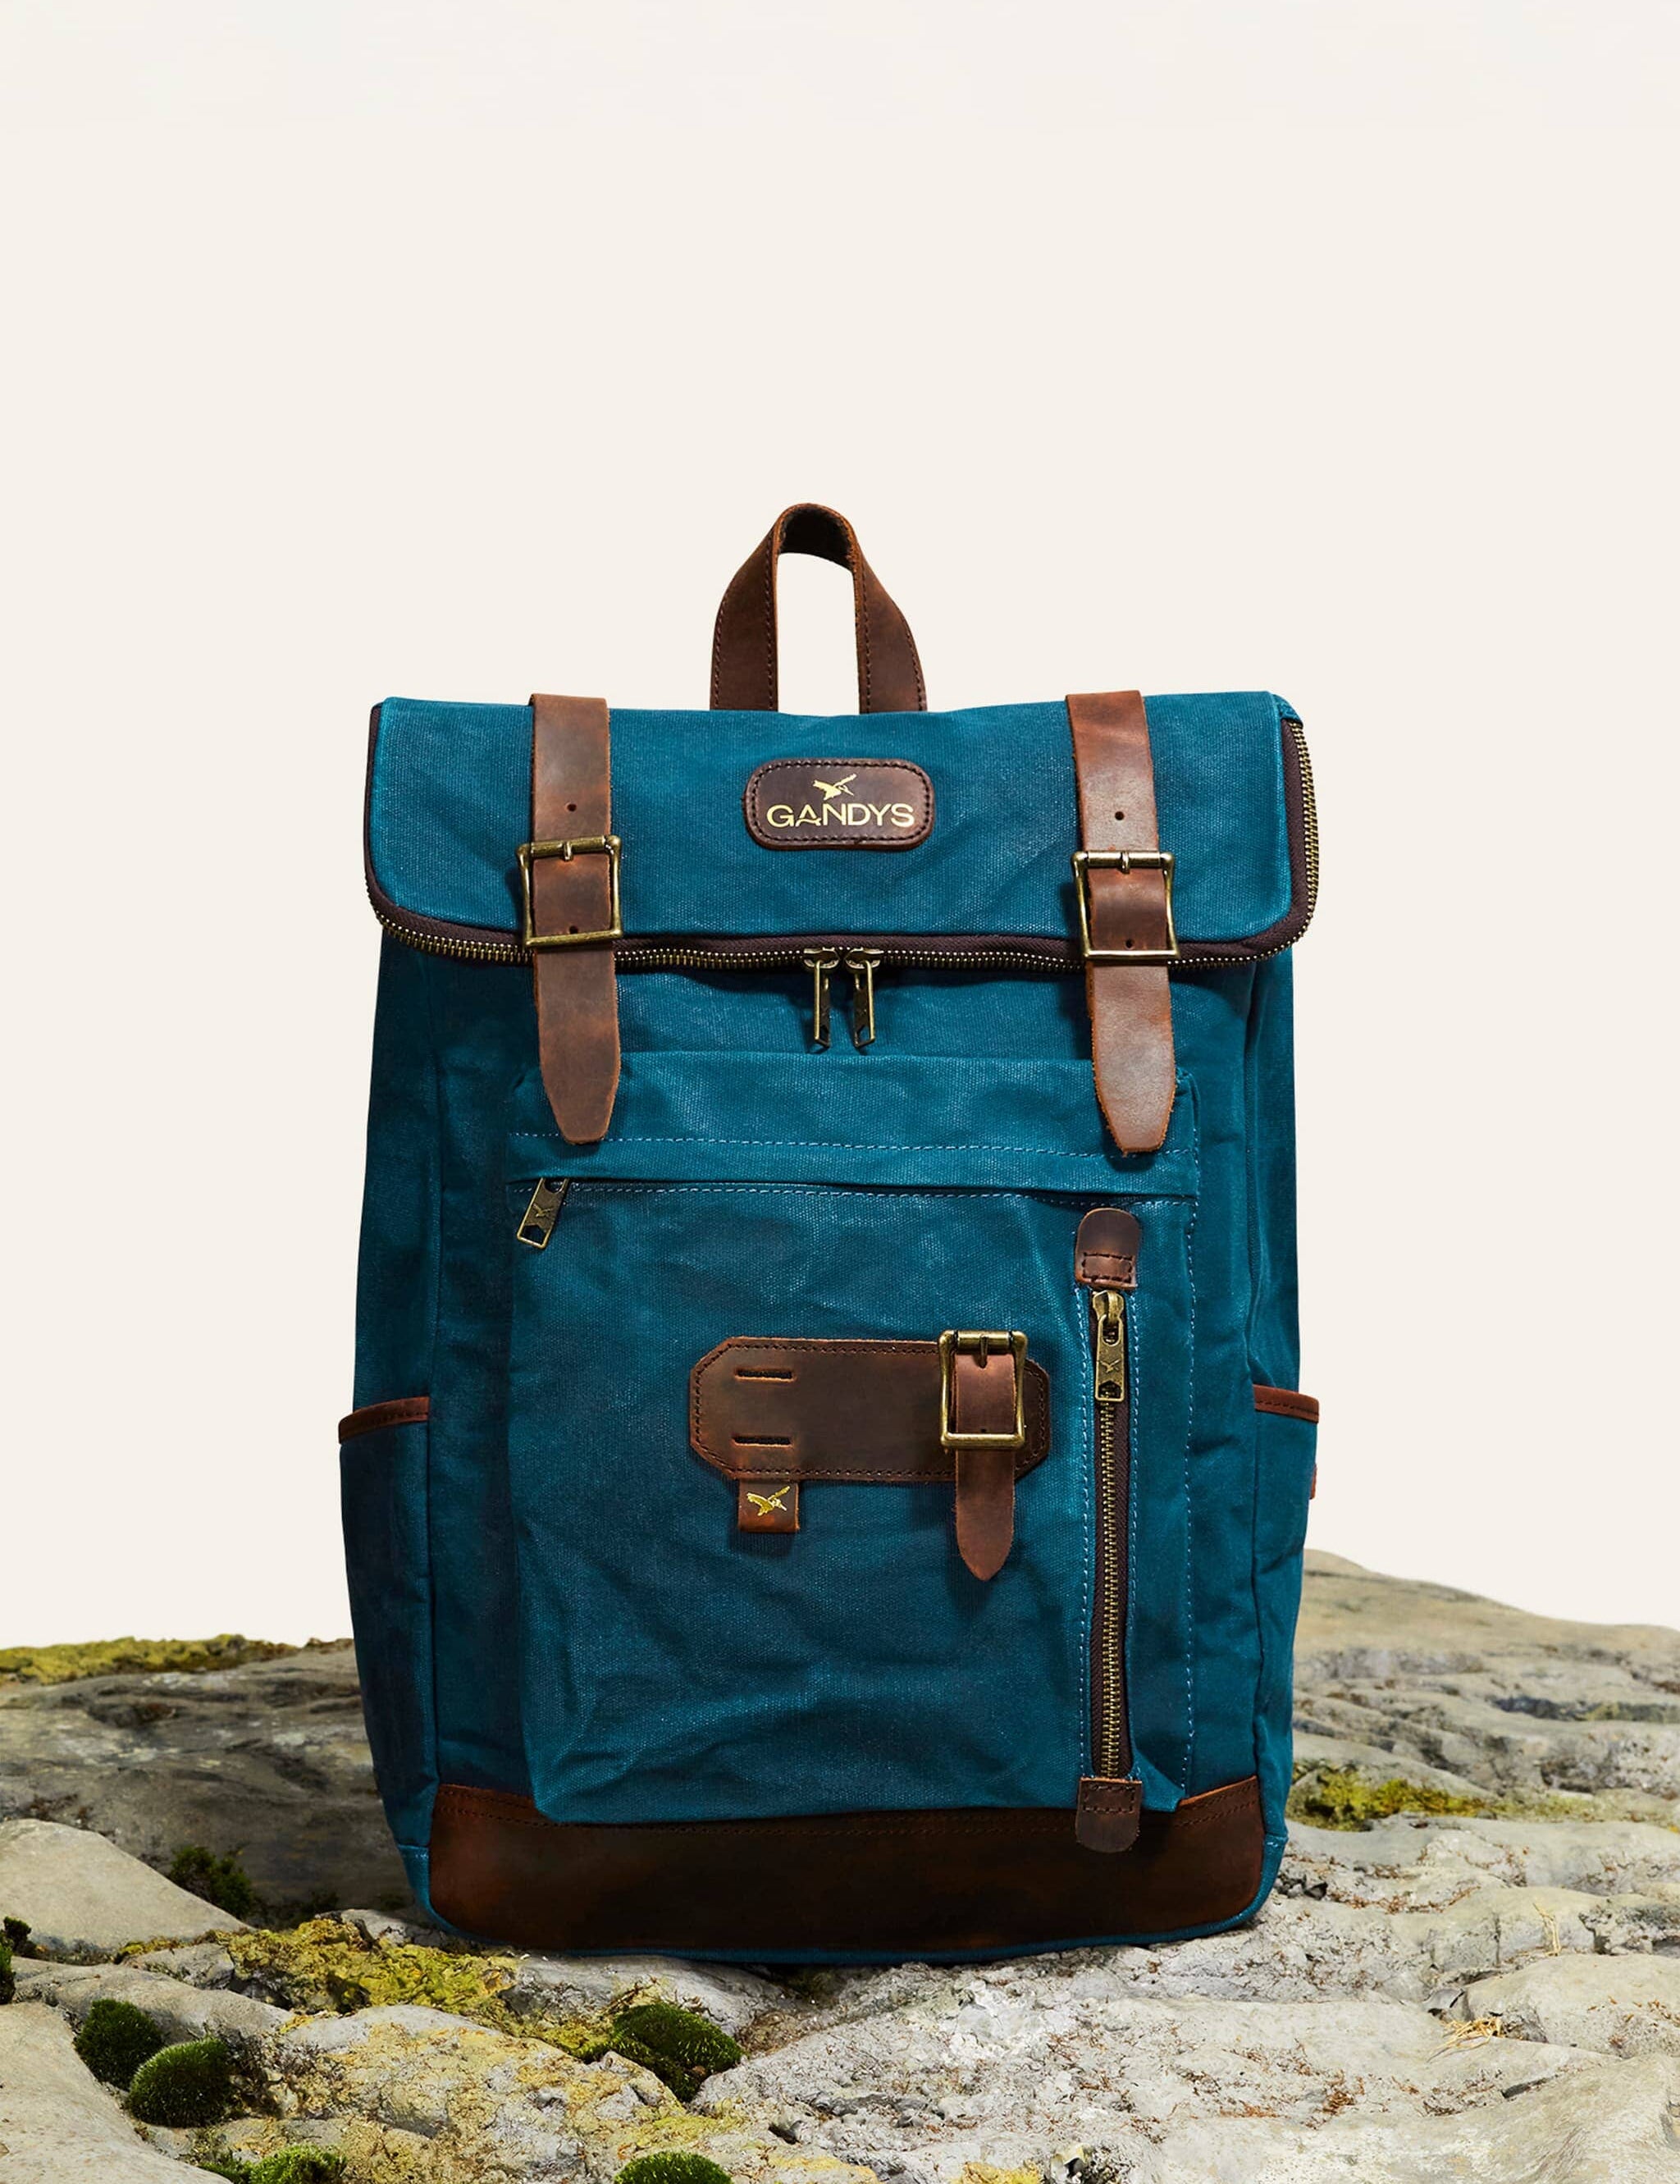 teal-waxed-authentic-bali-backpack-617932.jpg